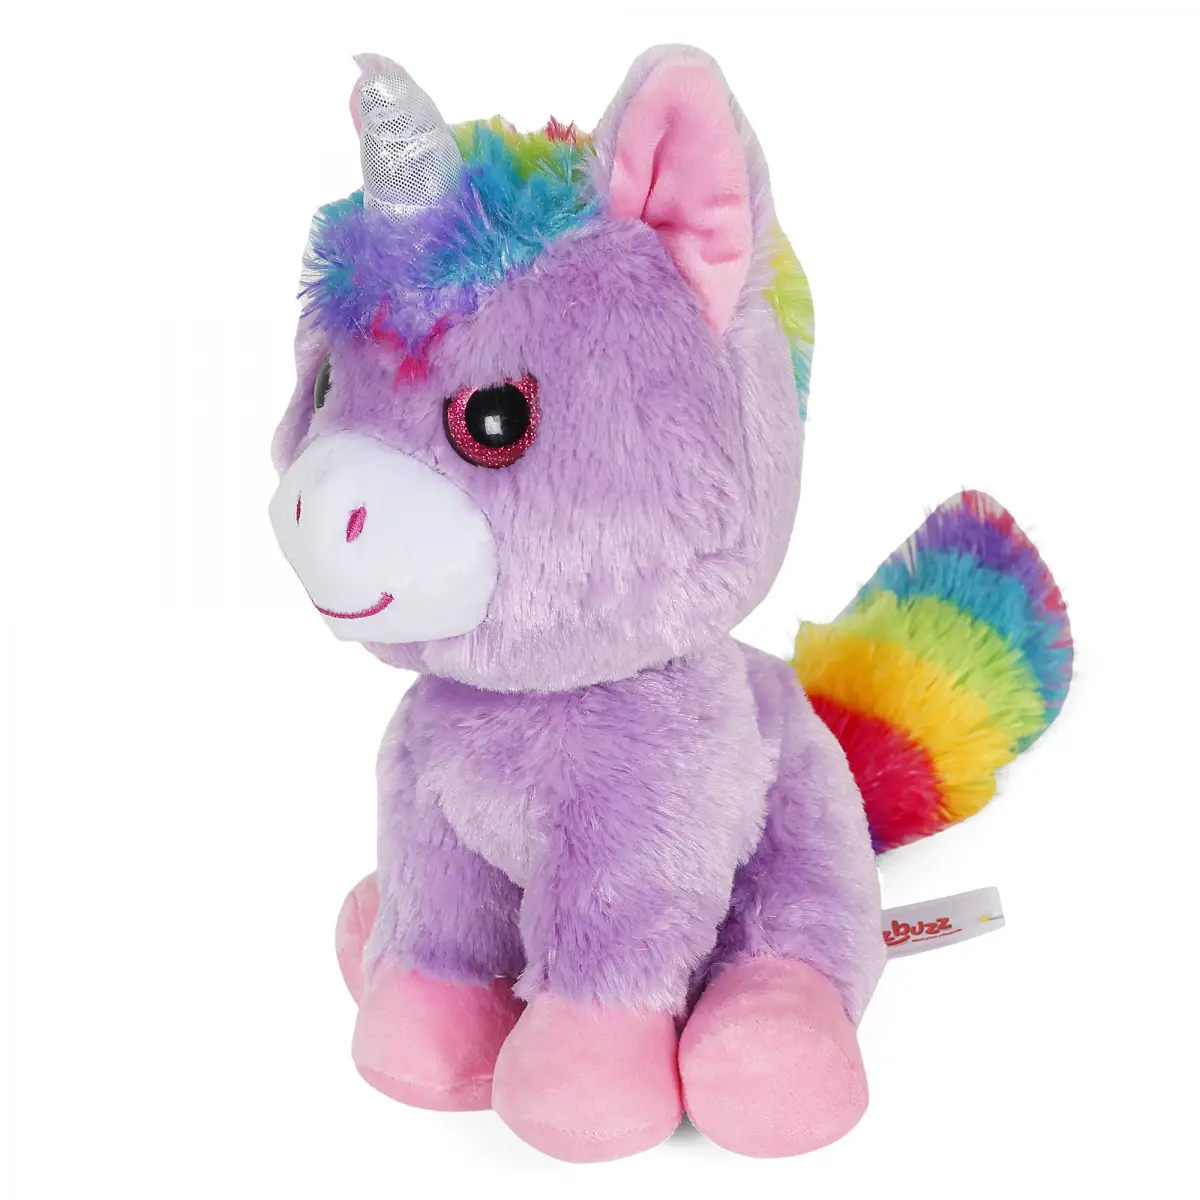 Fuzzbuzz Unicorn Beaniboos Soft Toys for Kids, 18M+, Purple